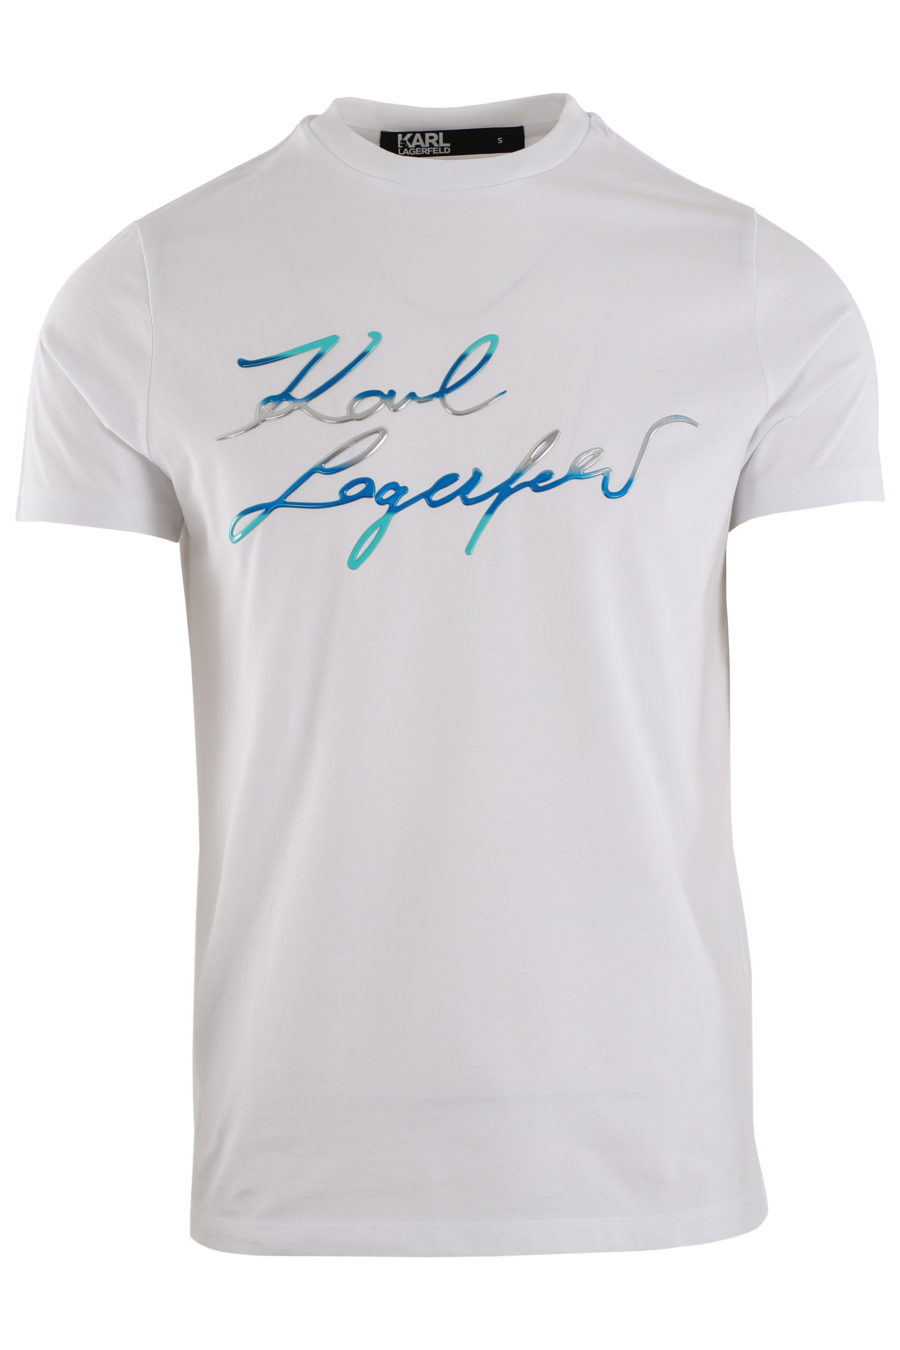 T-shirt blanc avec logo multicolore bleu - IMG 0428